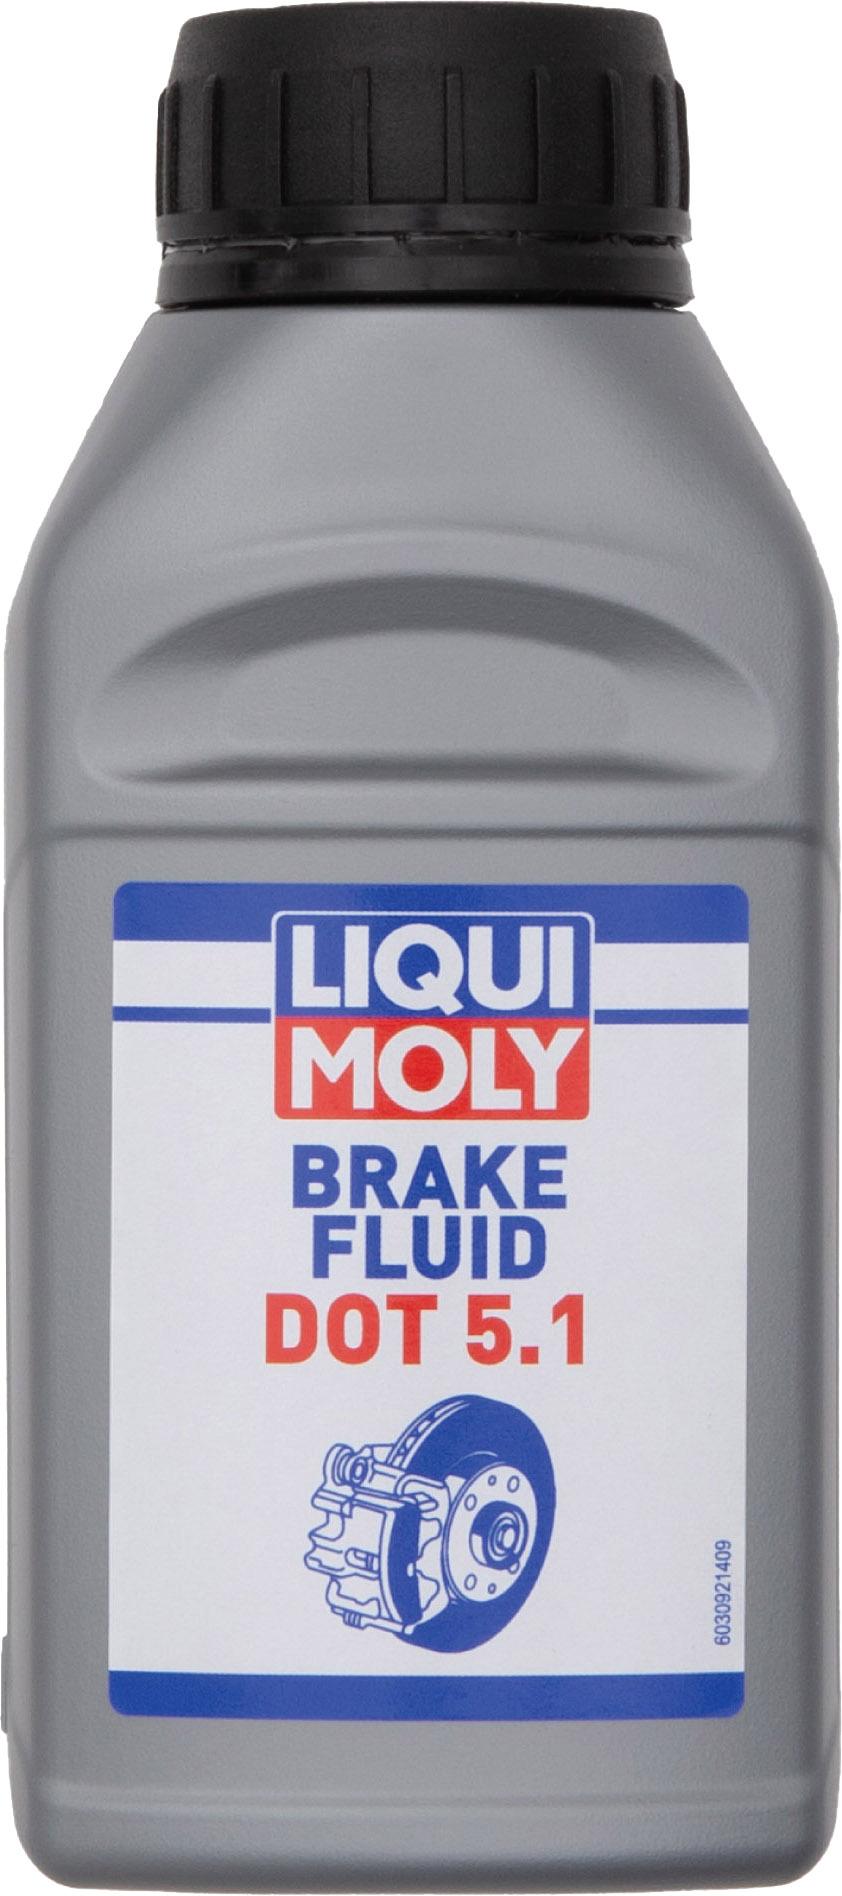 Bleed Kit Liqui Moly Dot 5.1 Brake Fluid (250ml)  Yellow